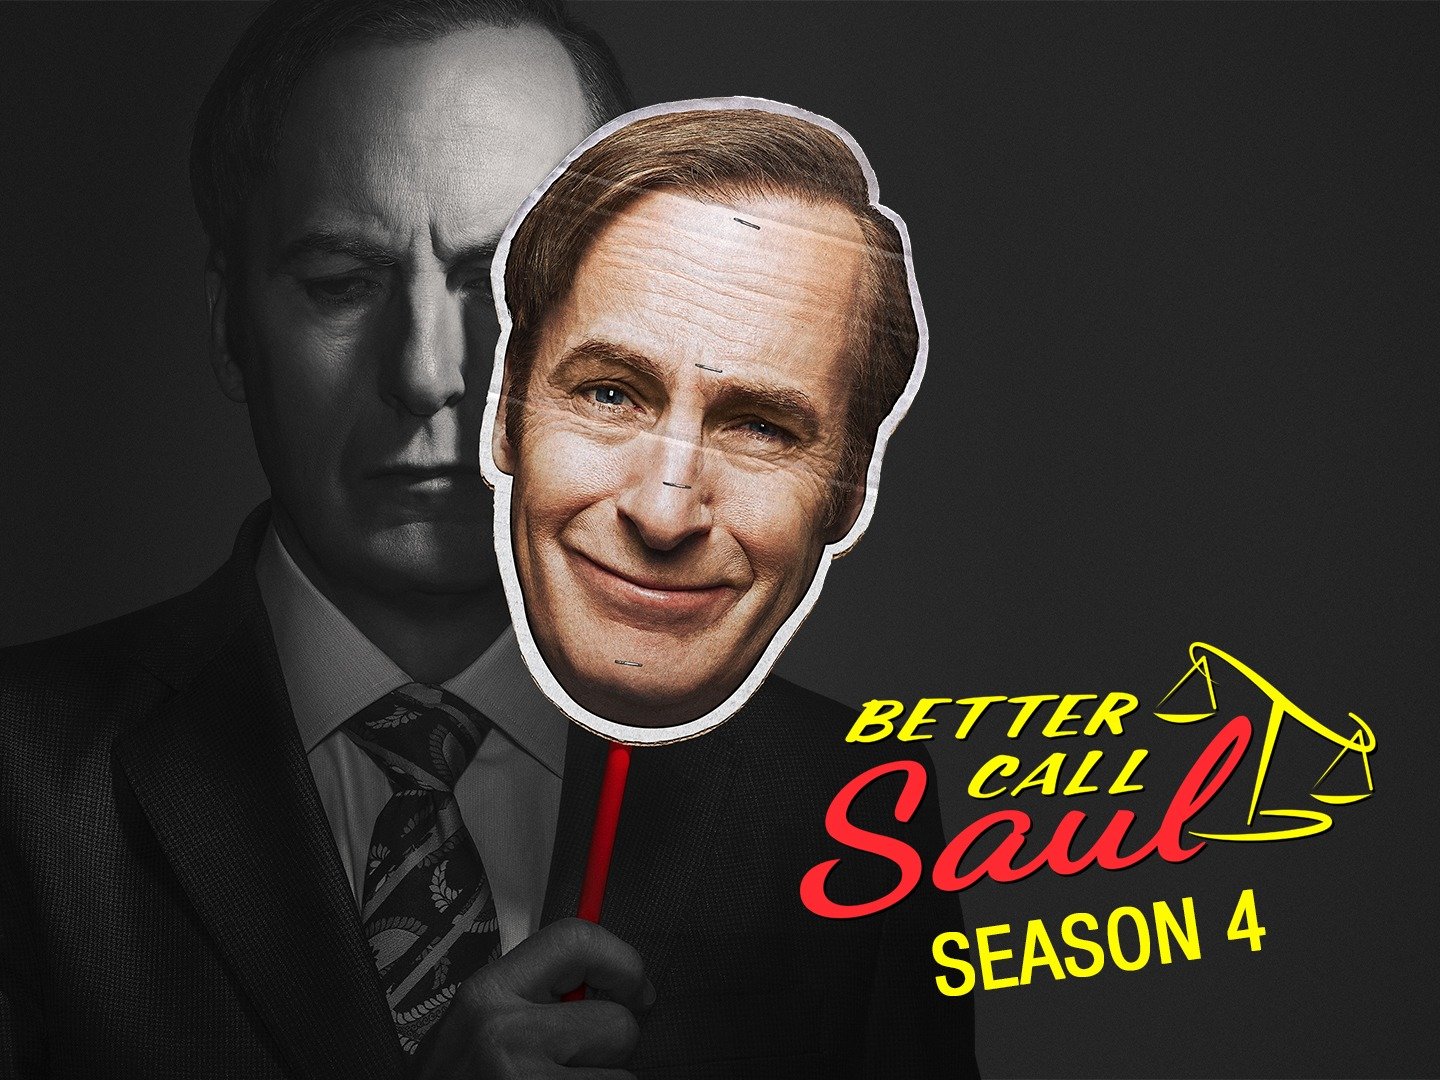 better call saul season 1 review